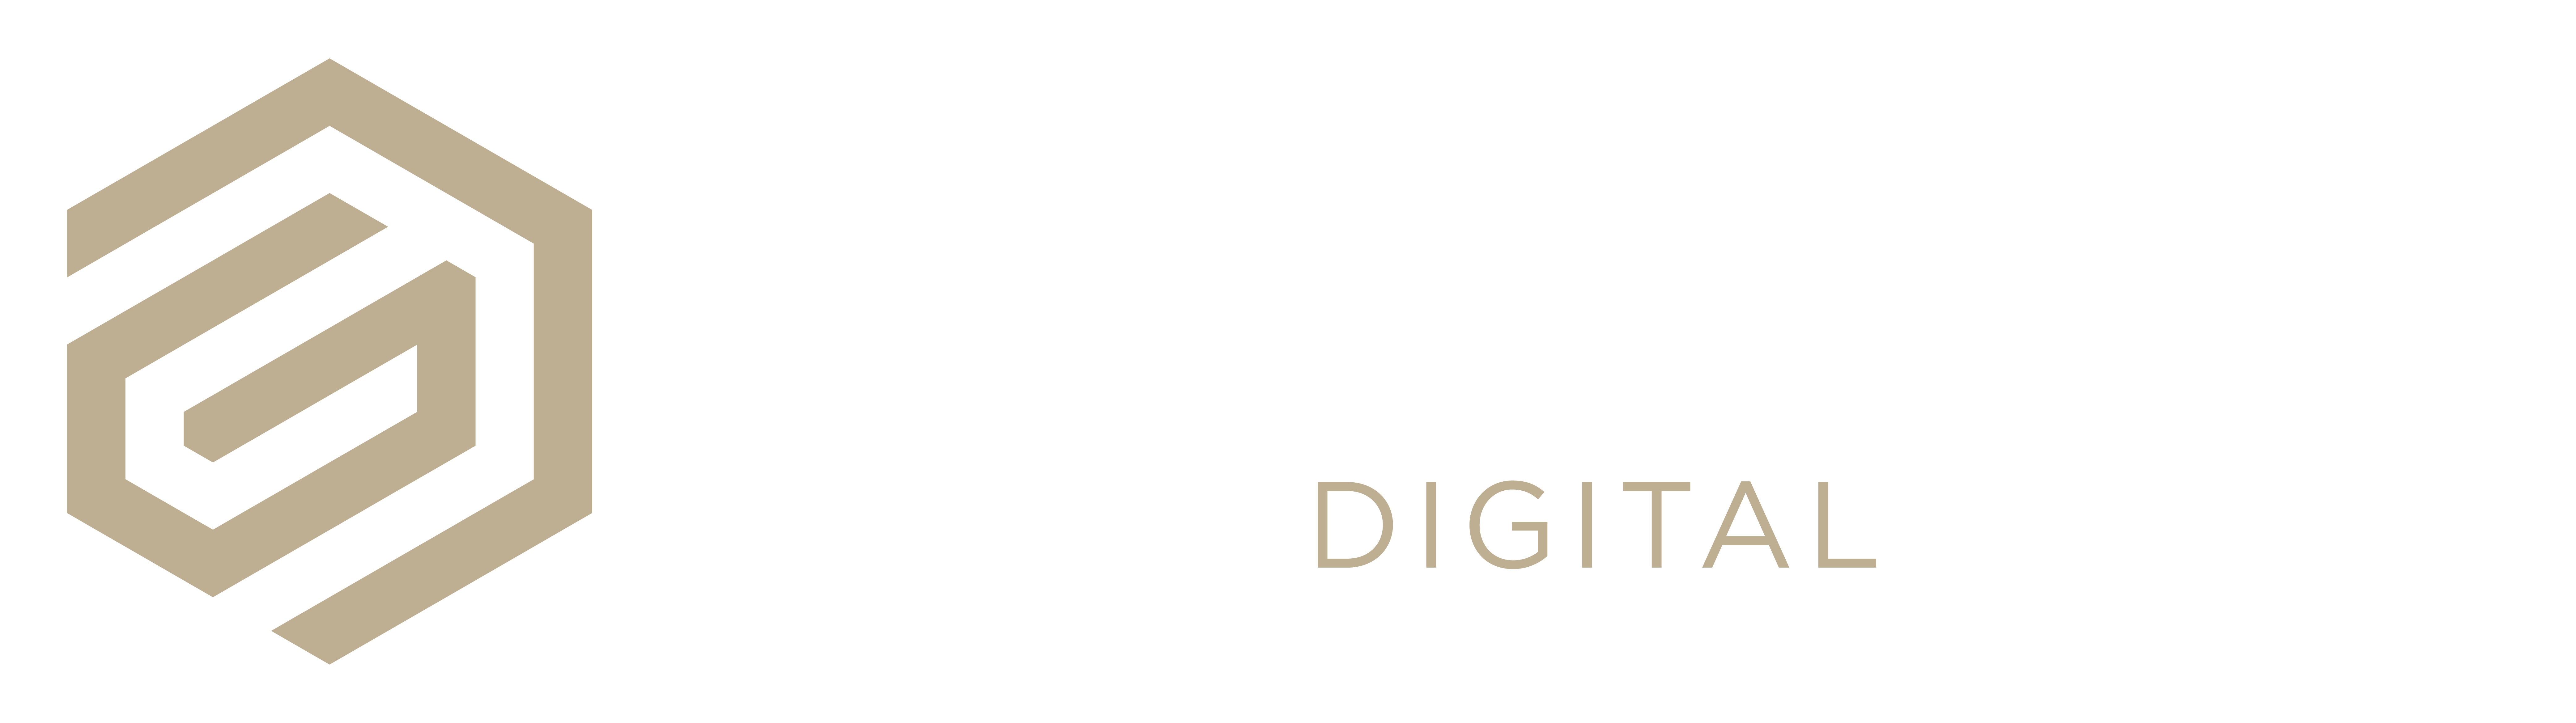 Go&Grow_Digital_logo